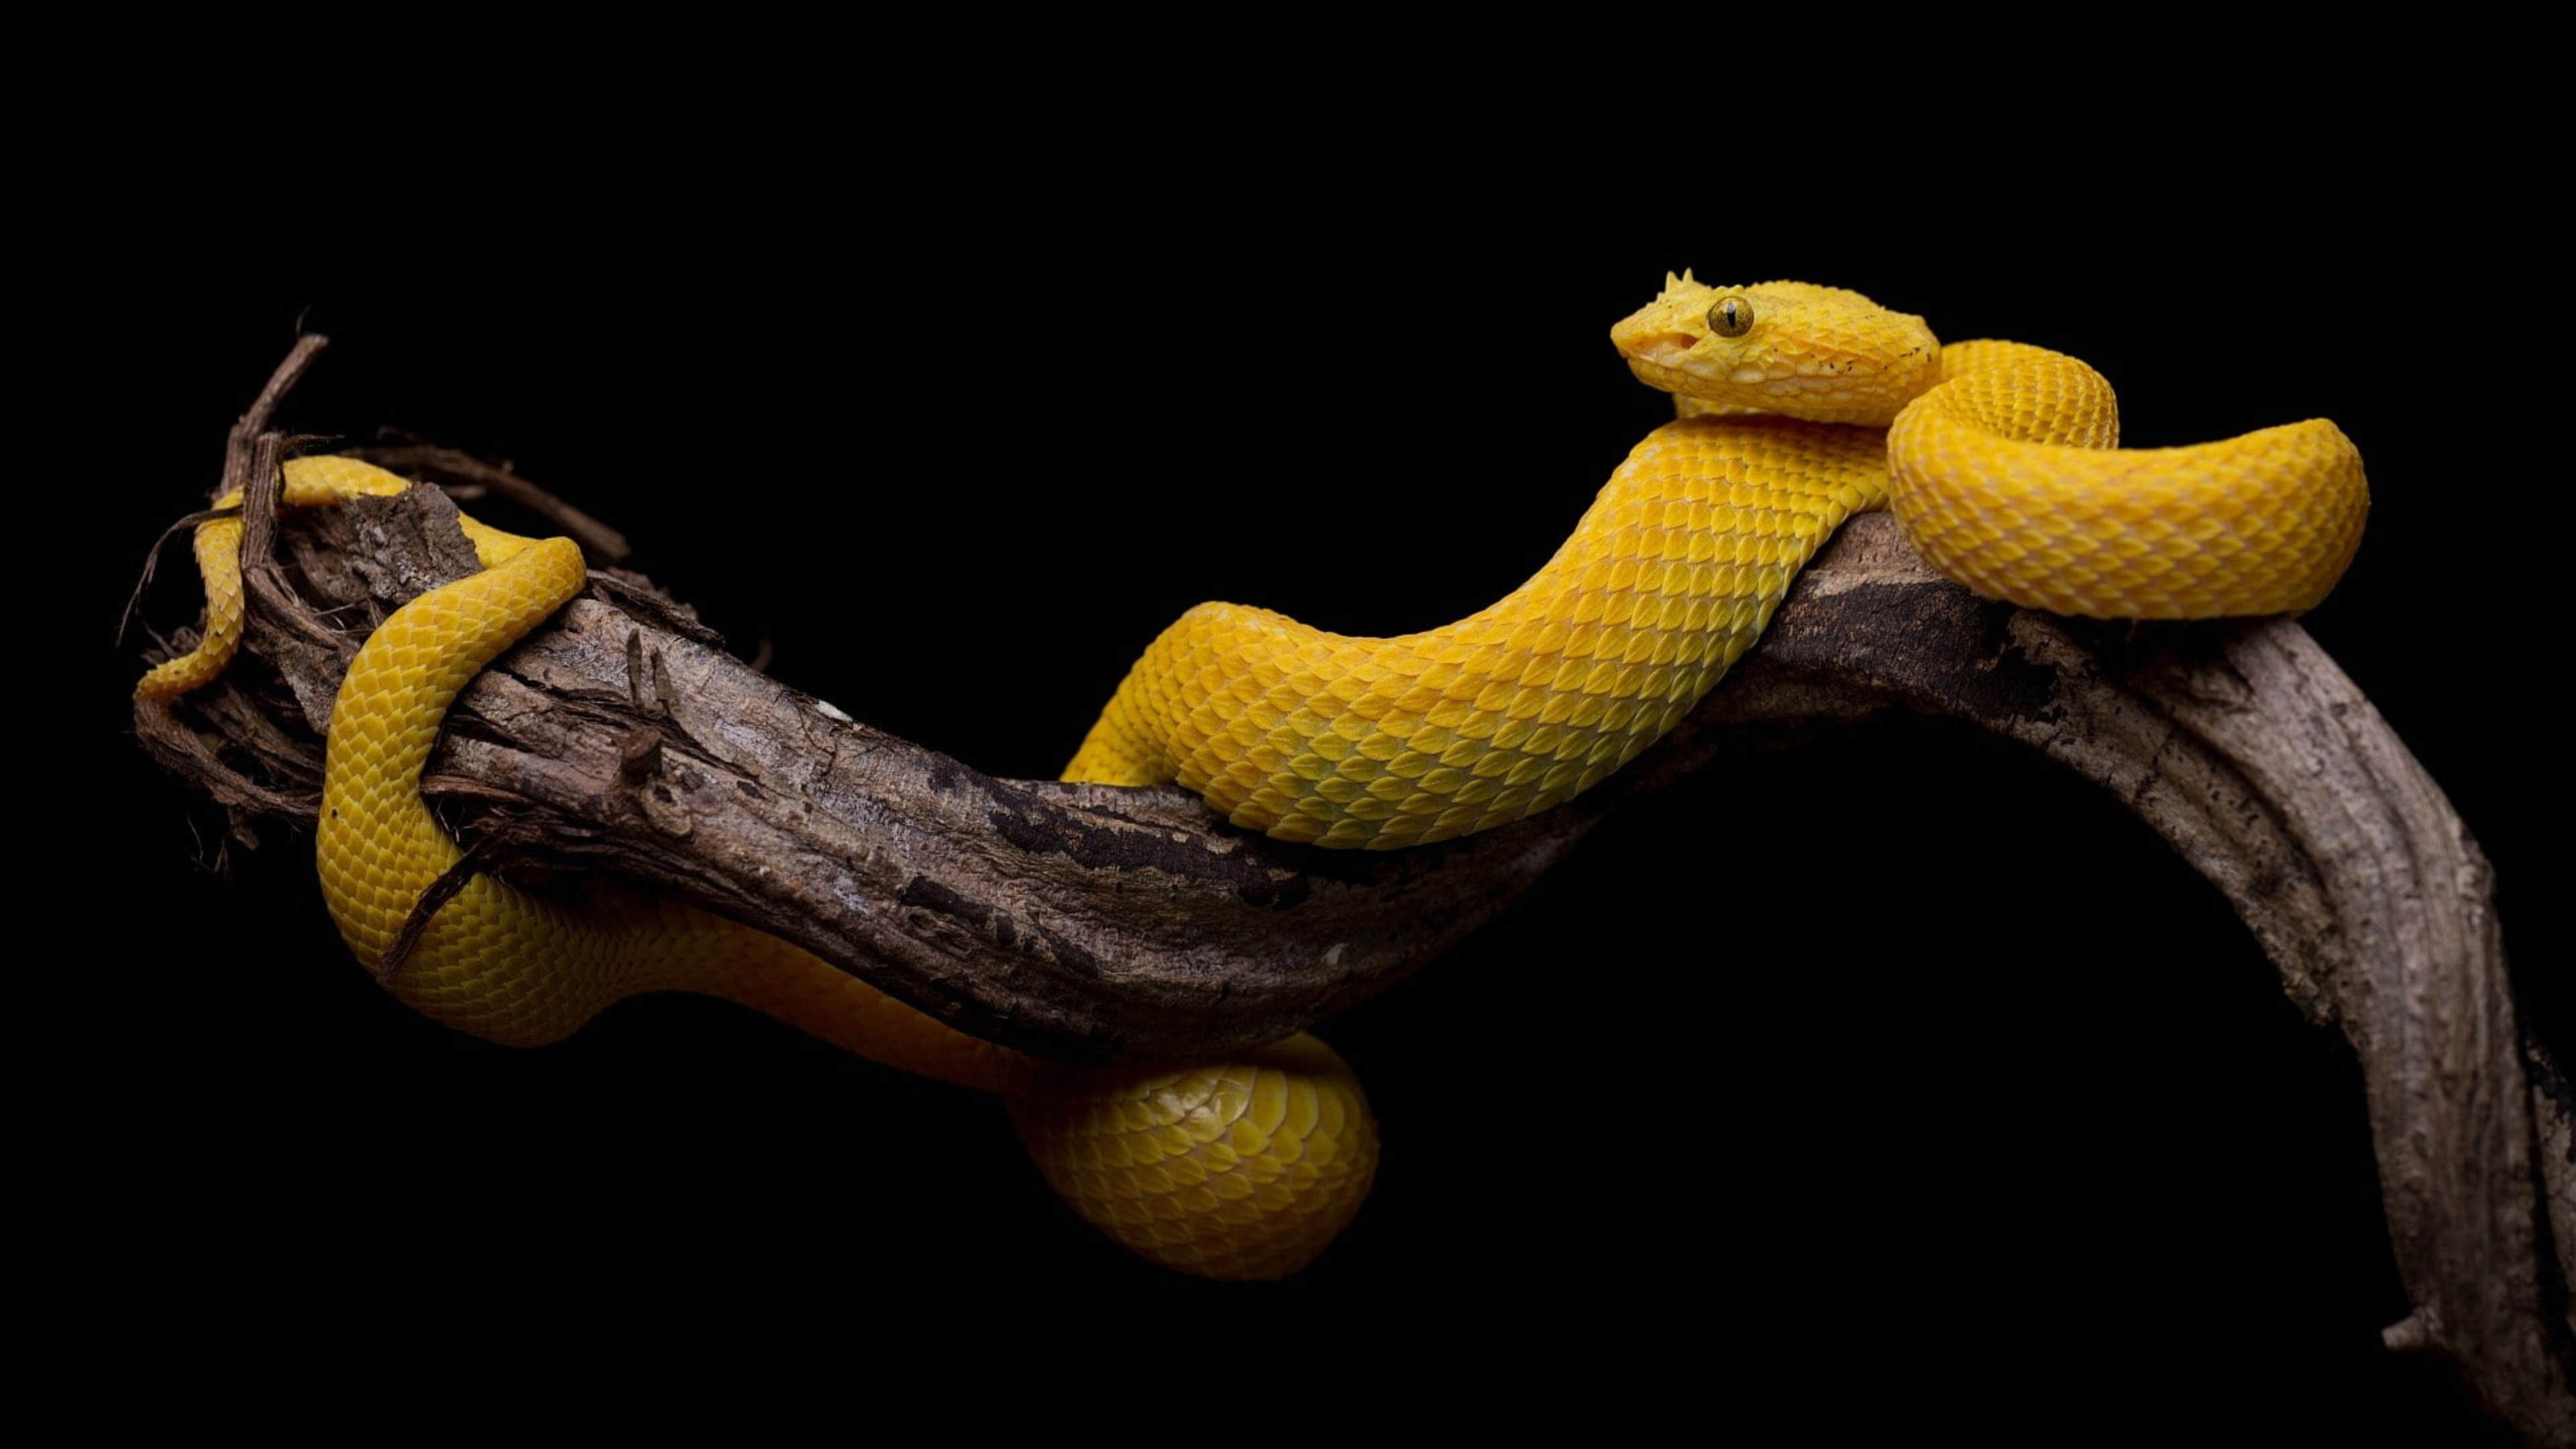 Yellow snake on tree branch in black Wallpaper k hd animals